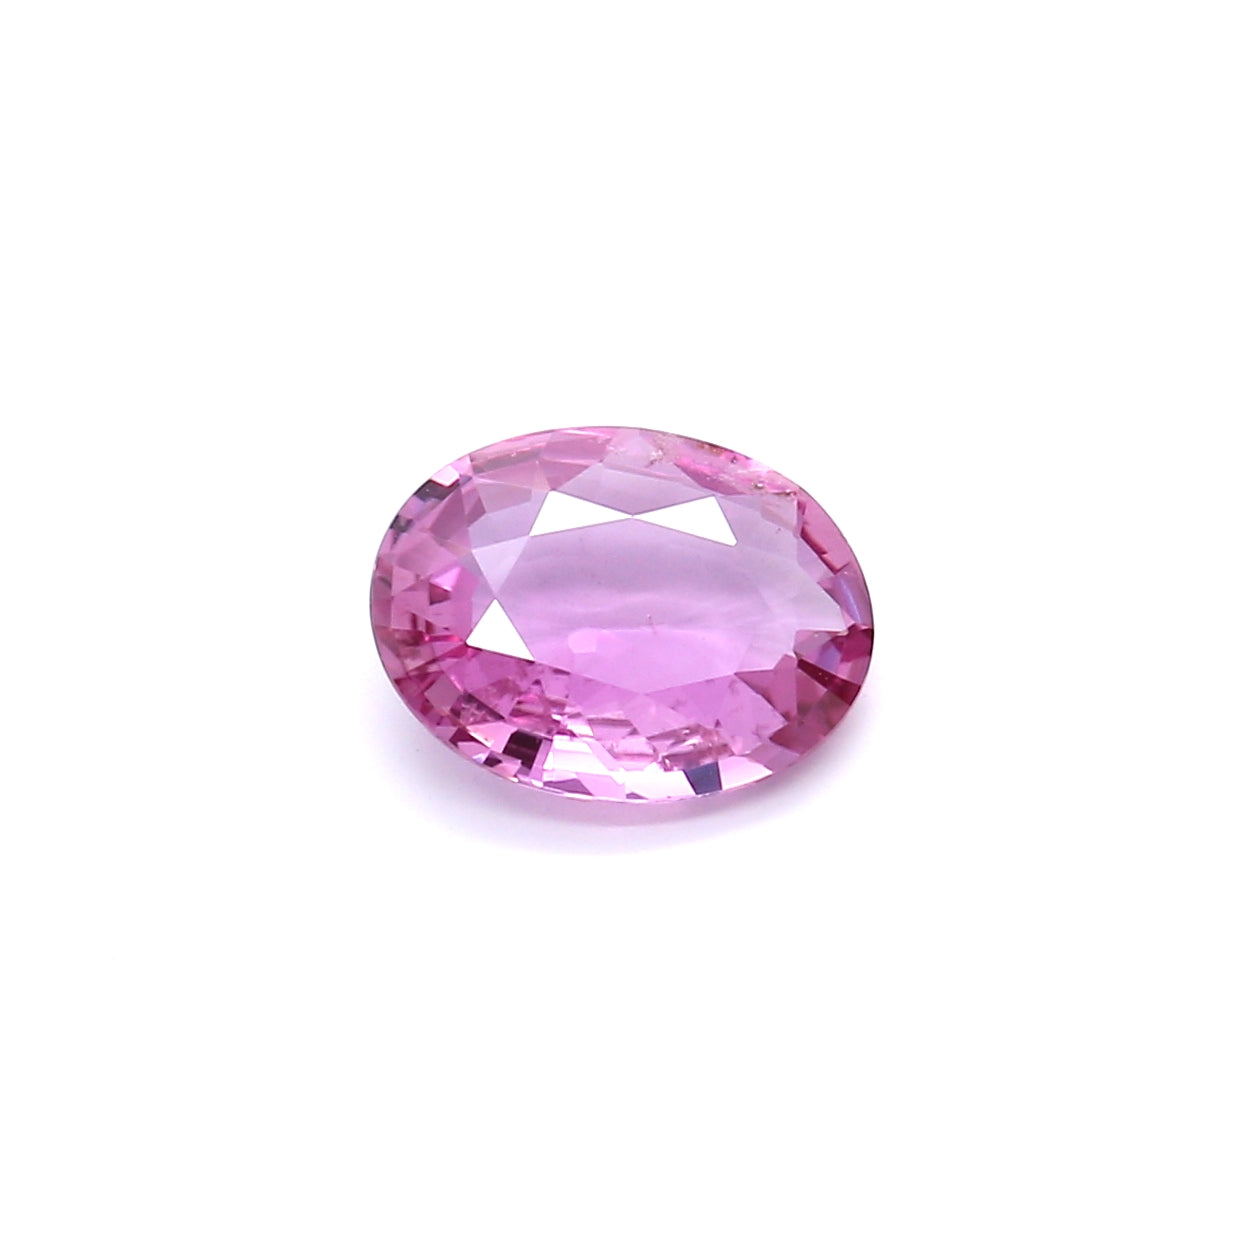 1.63ct Purplish Pink, Oval Sapphire, Heated, Madagascar - 9.00 x 6.98 x 3.01mm